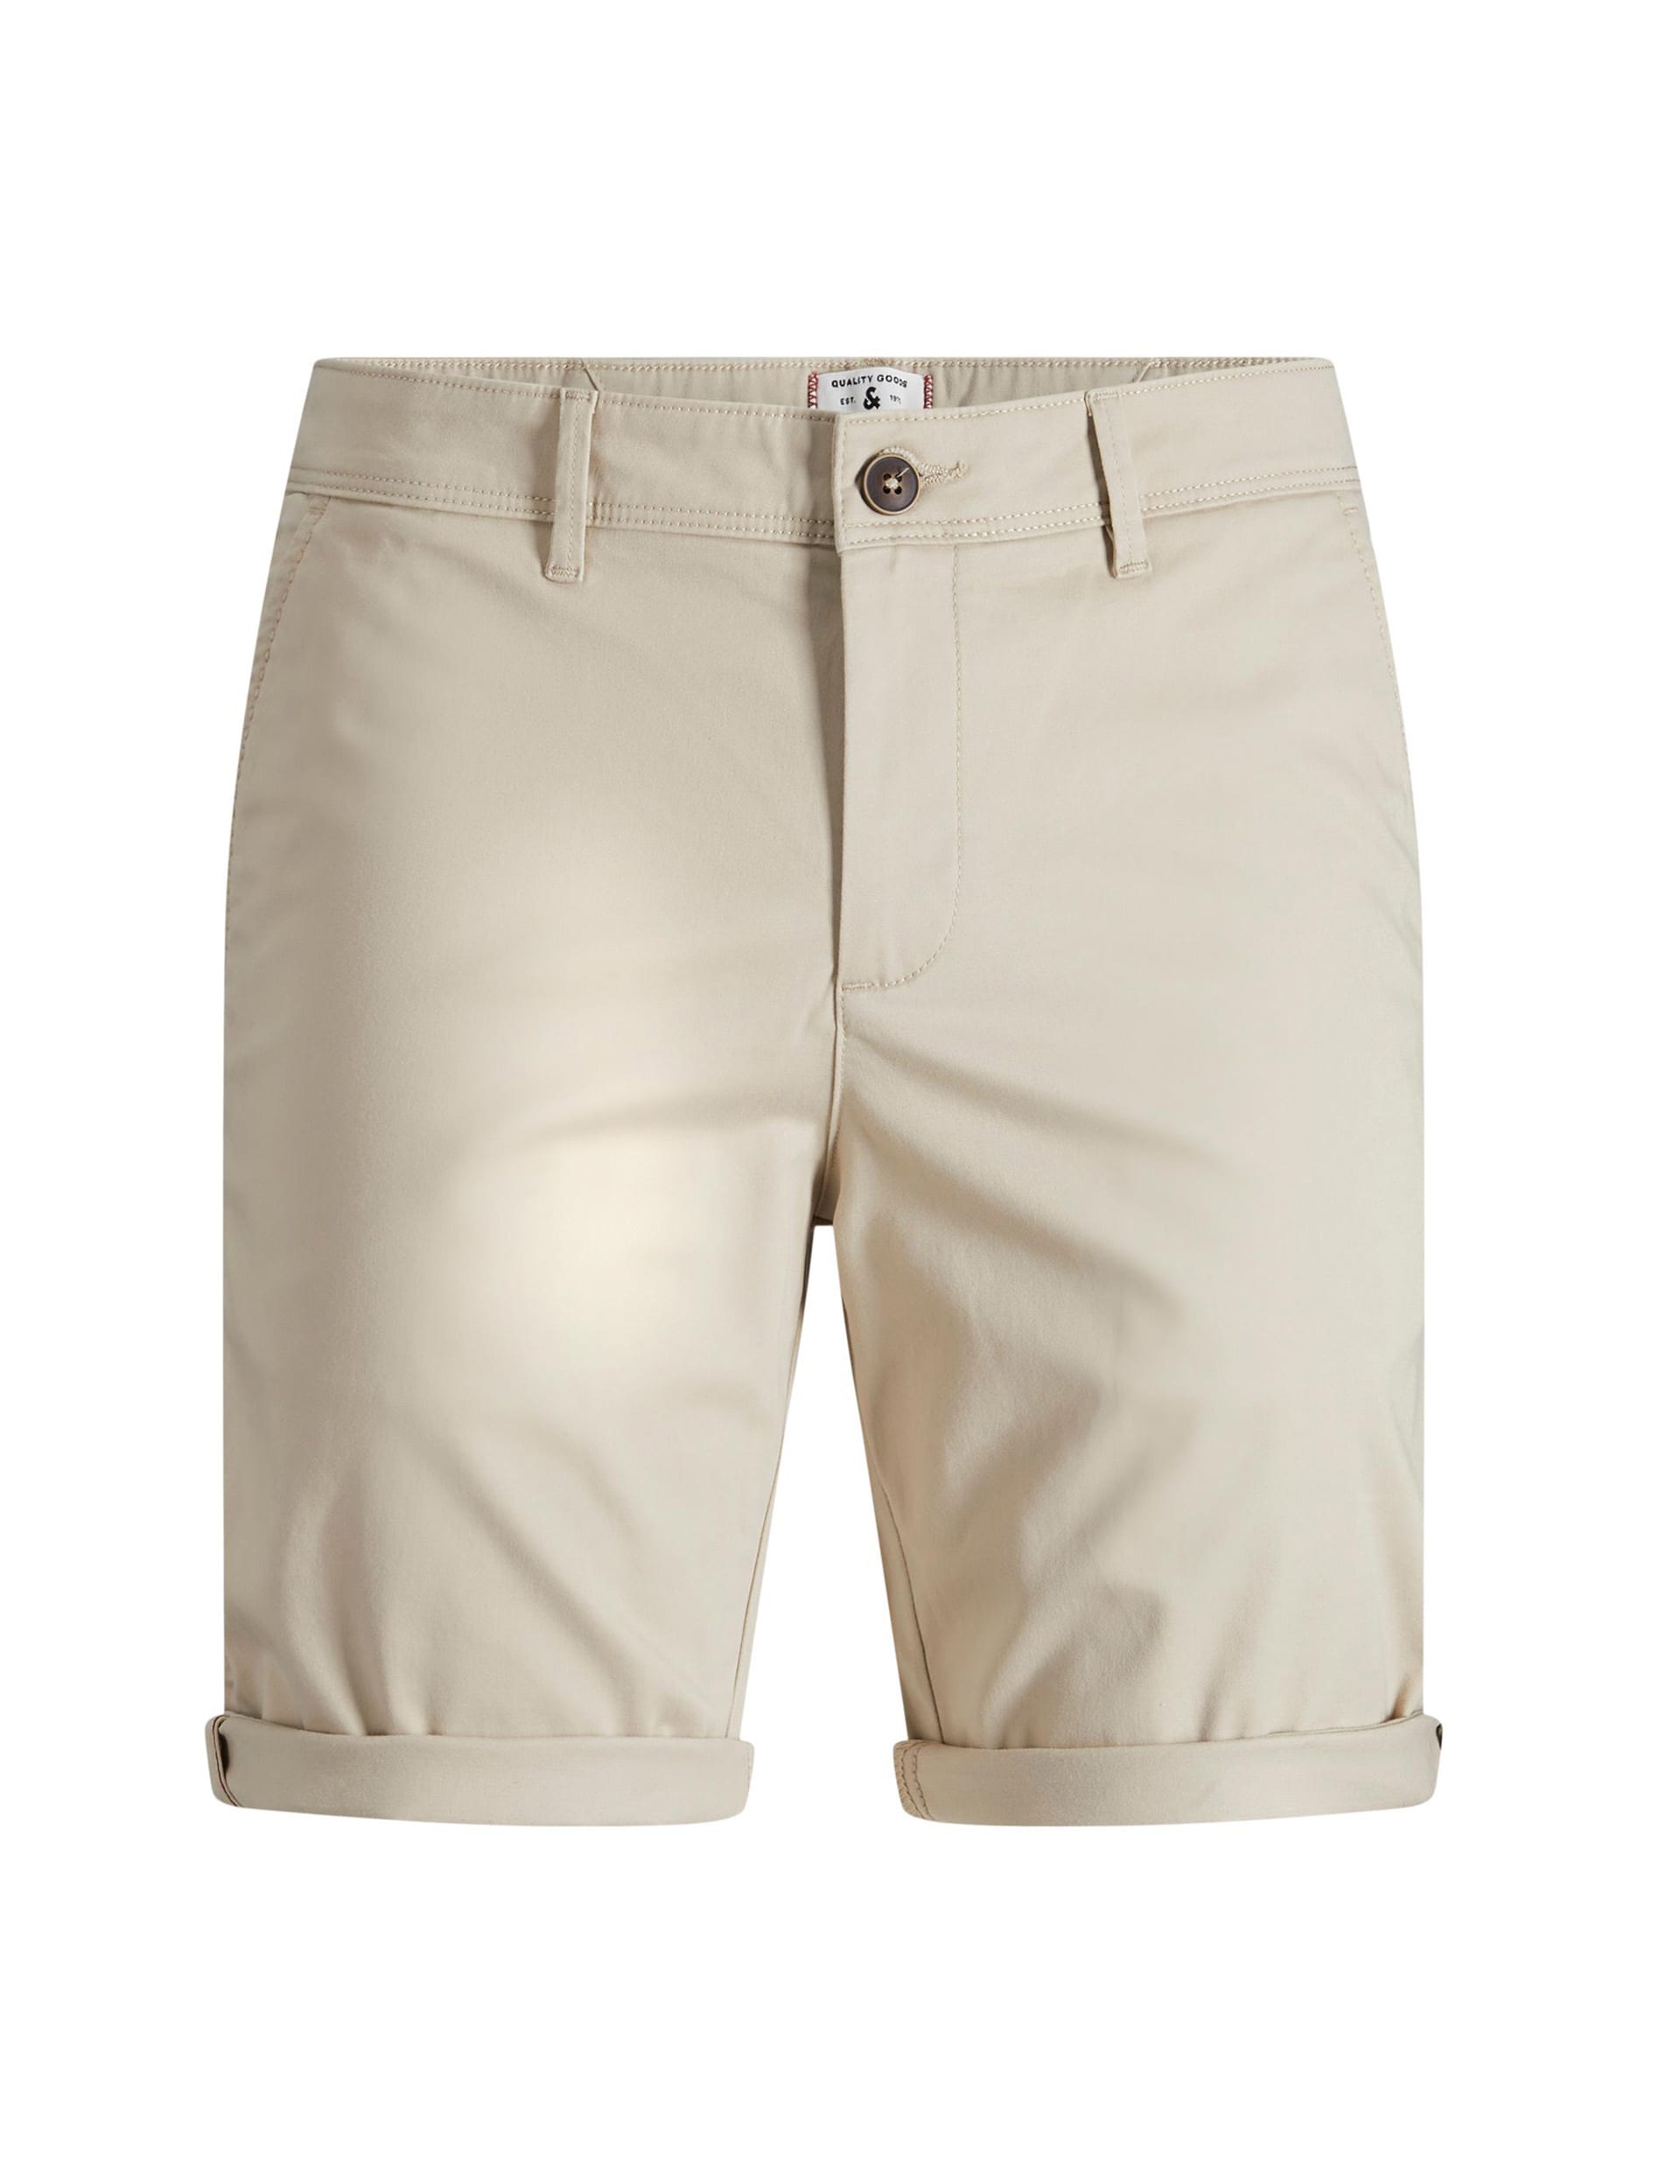 Cotton Rich Chino Shorts (8-16 Yrs)